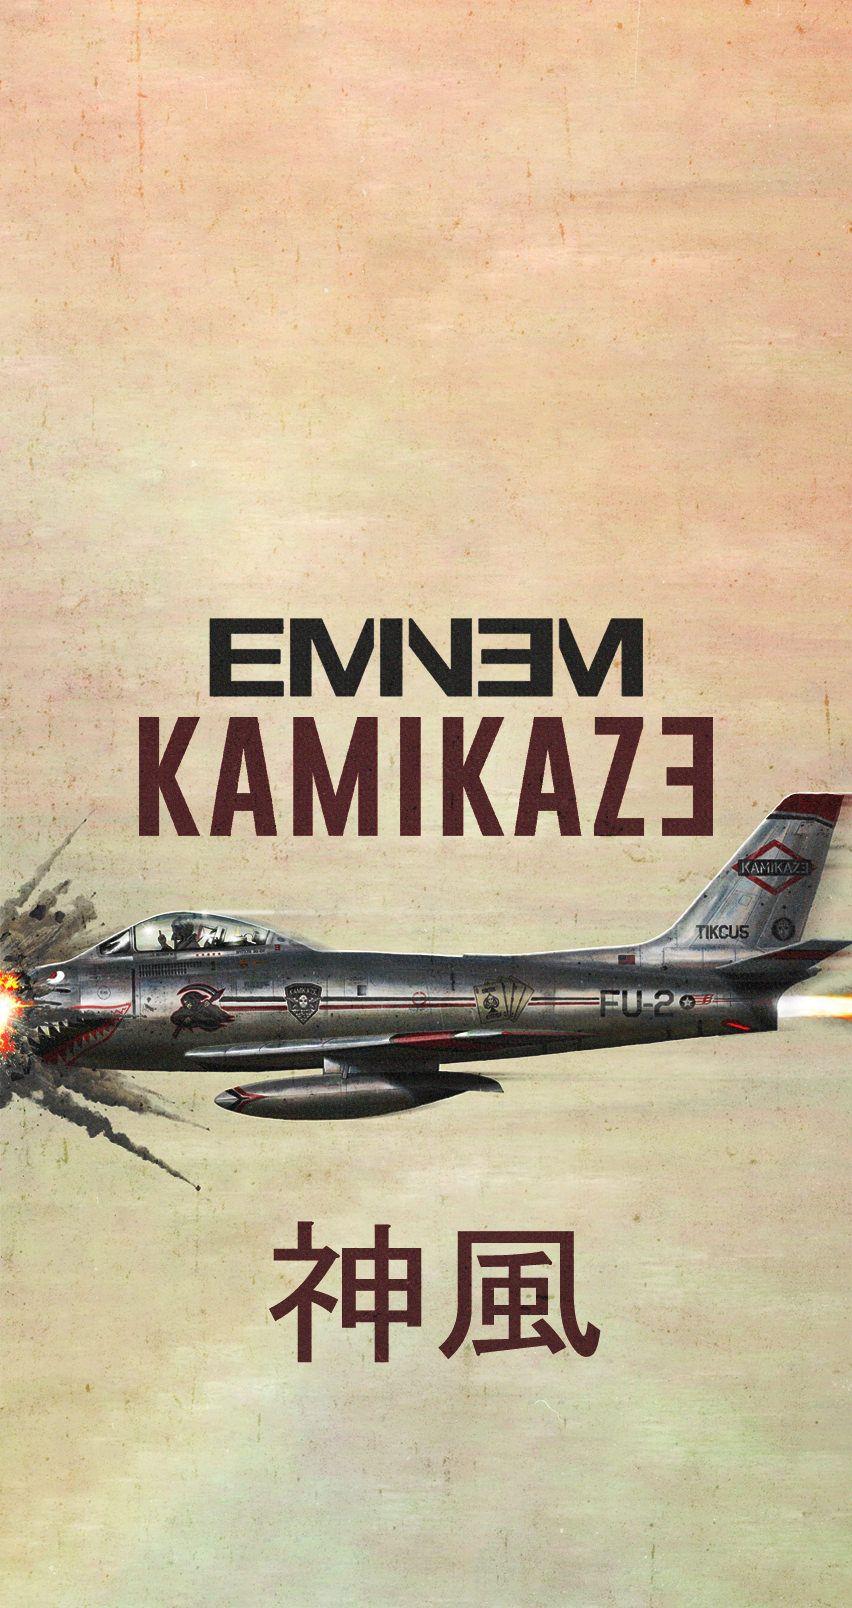 eminem kamikaze zip album free download